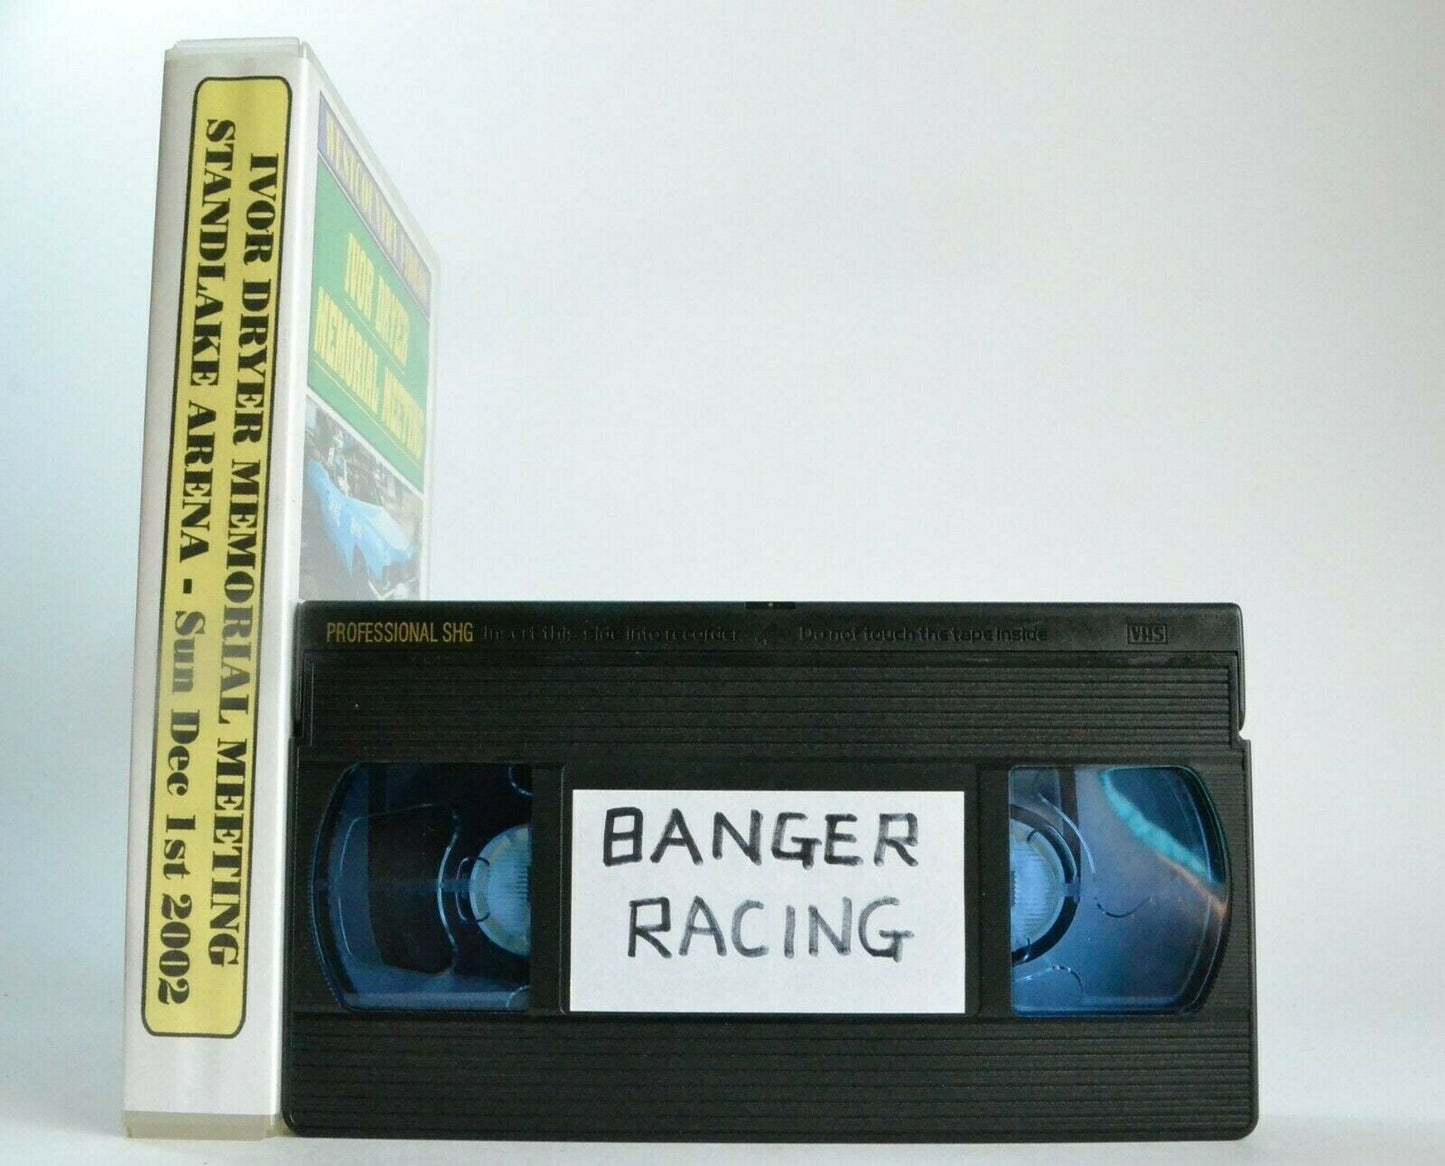 Ivor Dryer Memorial Meeting [Banger Car Racing] - Standlake Arena (2002) - VHS-